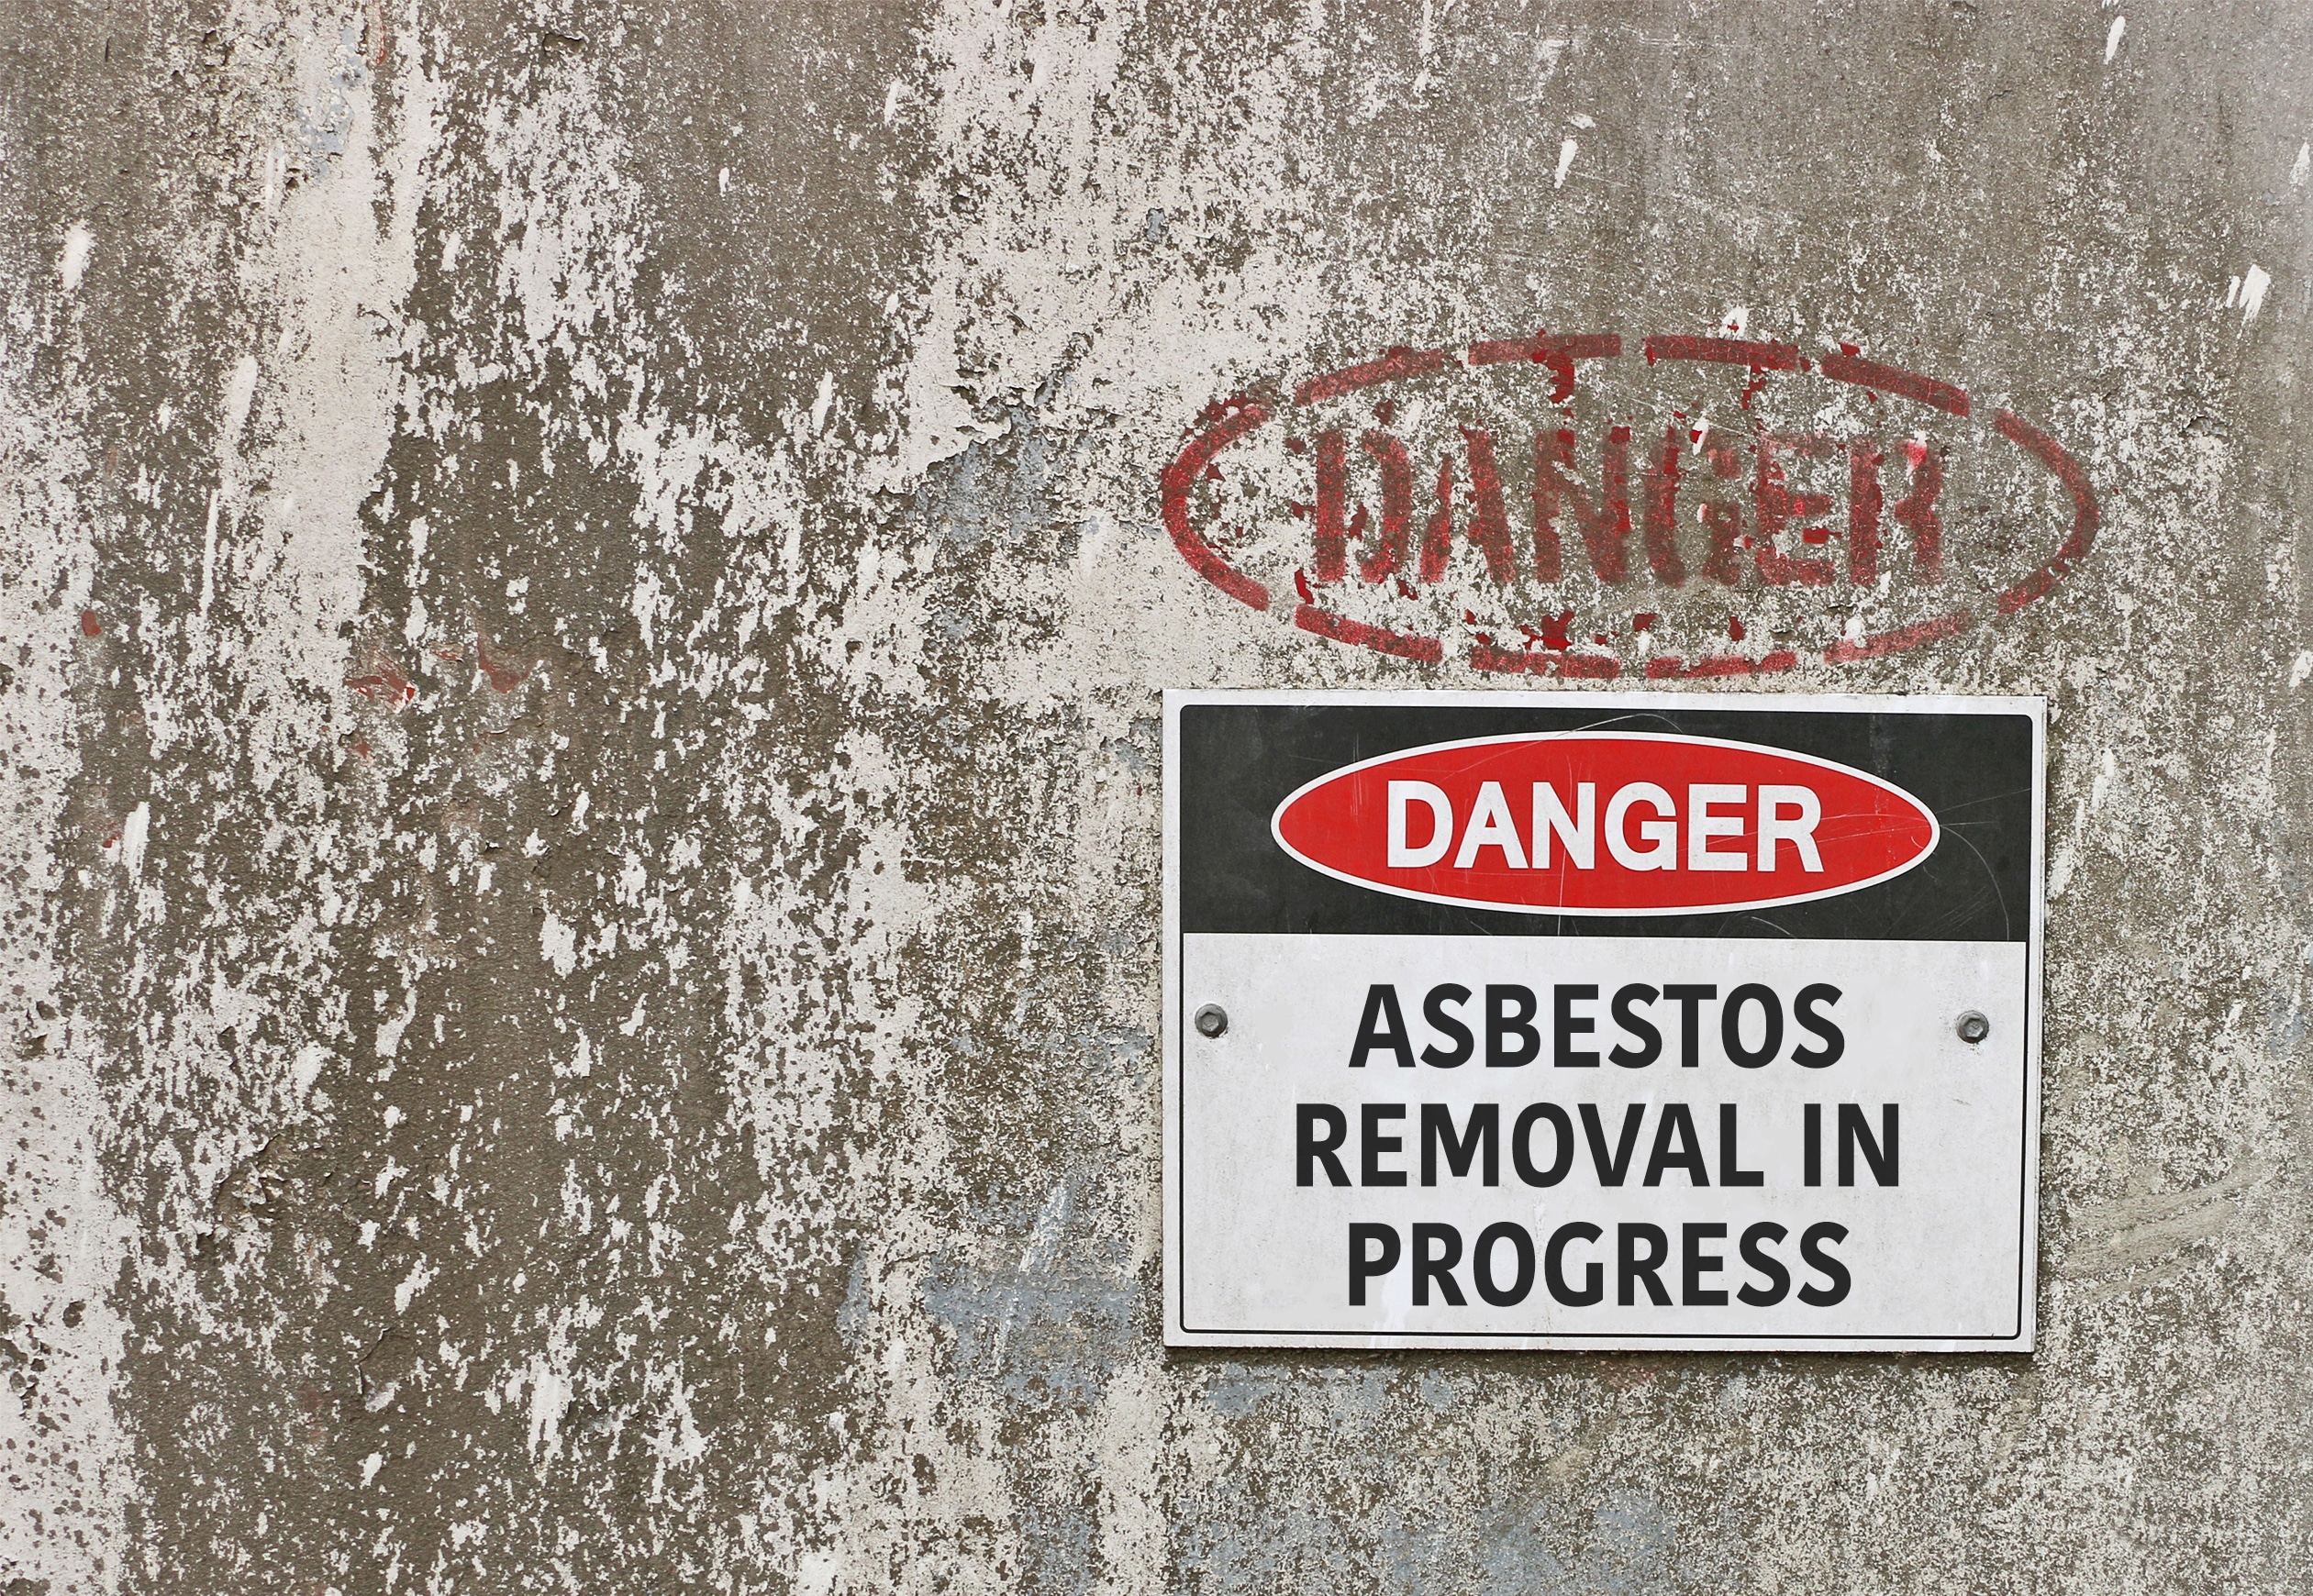 Expert Testimony Upheld in Brake-Related Asbestos Suit